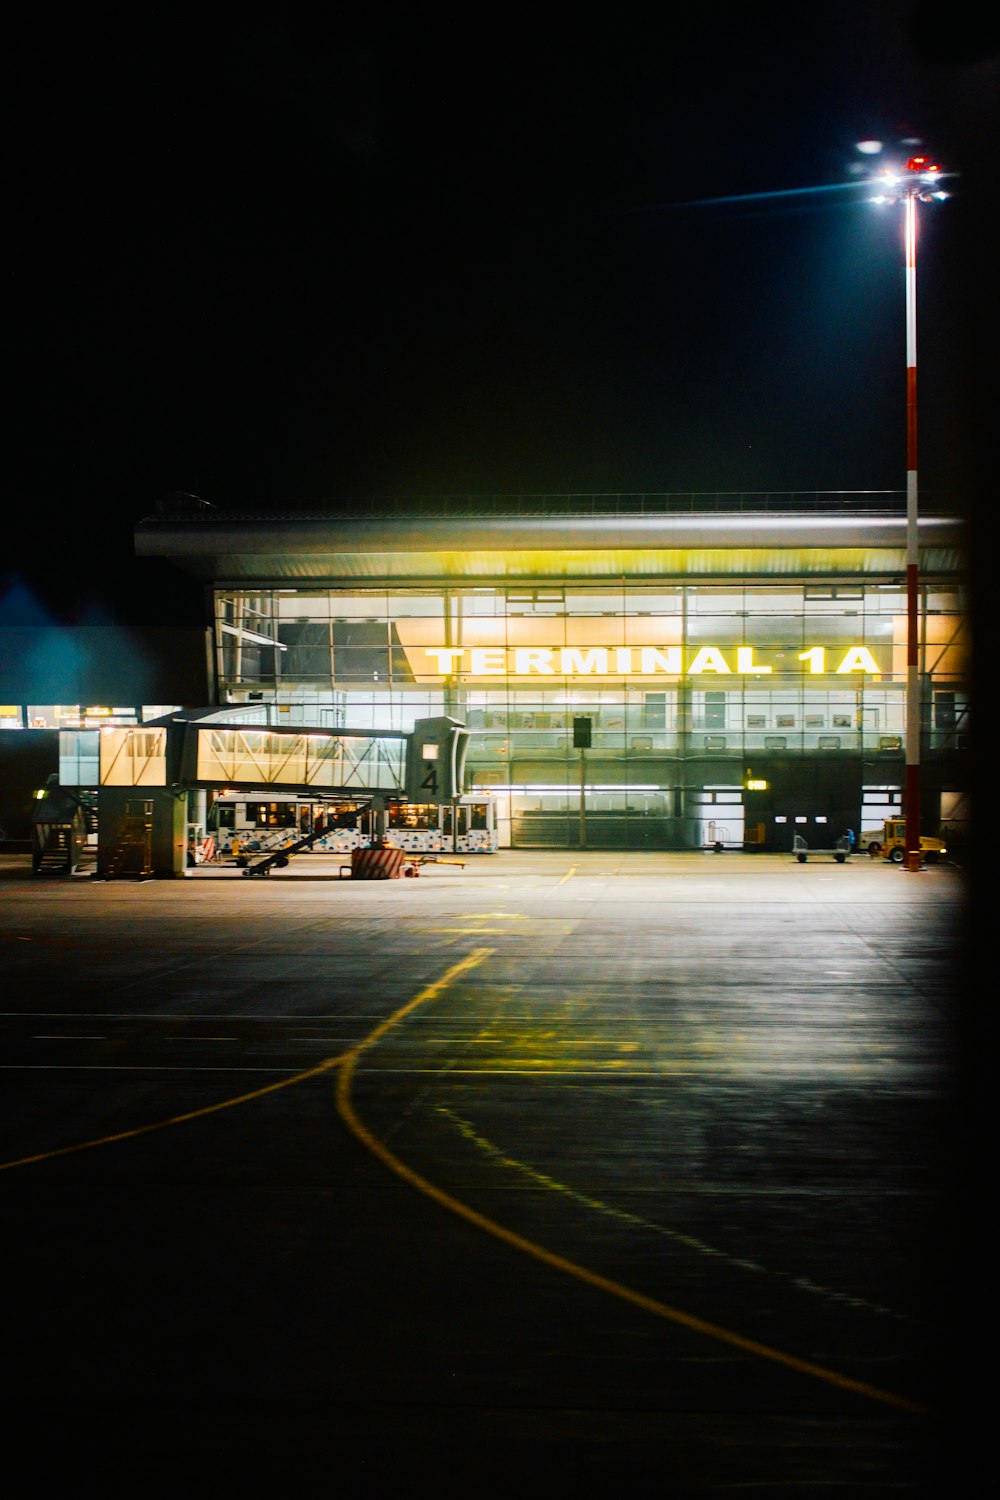 an airport terminal lit up at night time